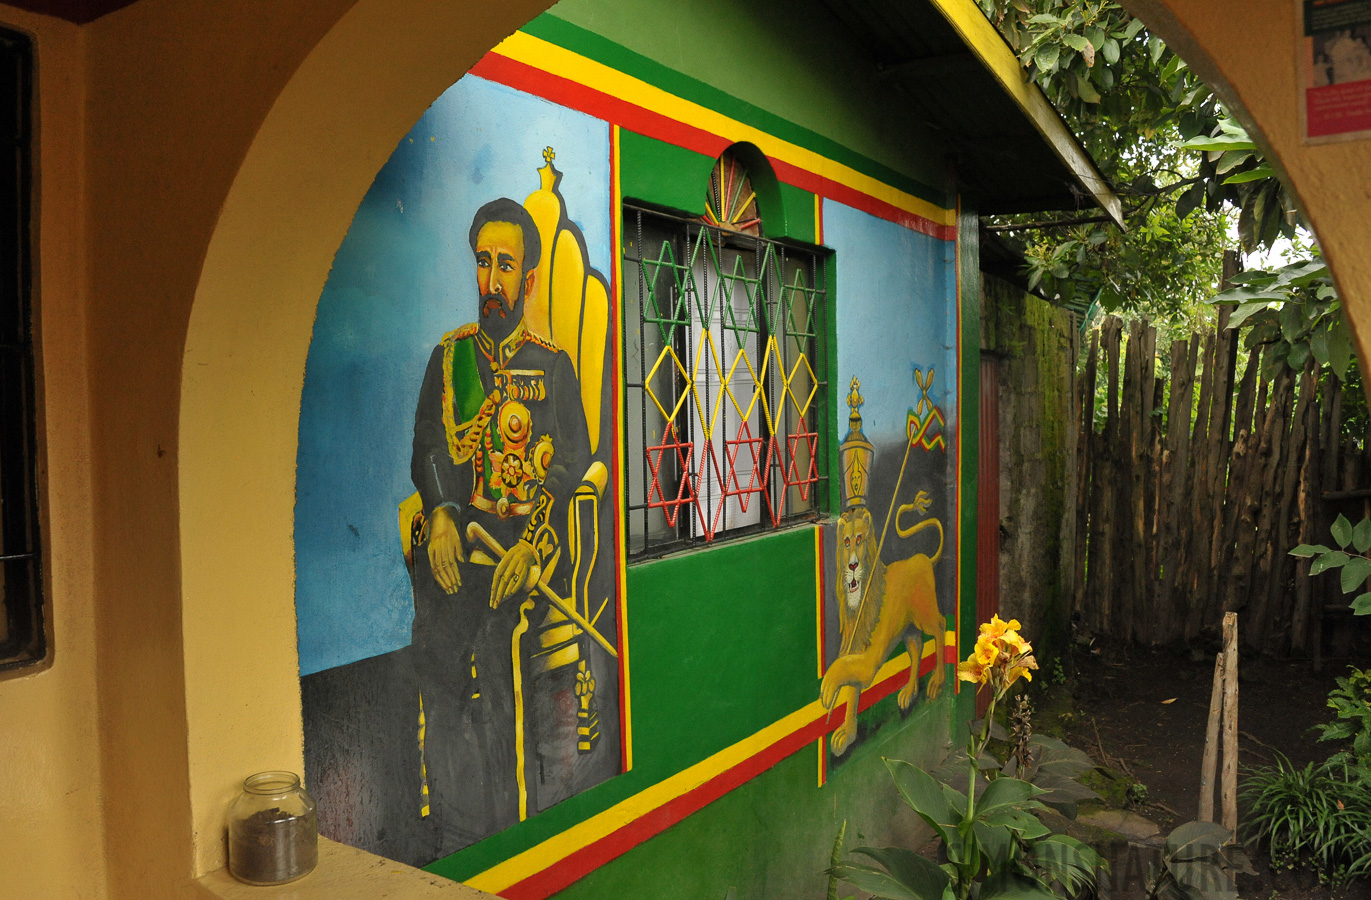 Church of the Rastafari [28 mm, 1/640 sec at f / 8.0, ISO 3200]